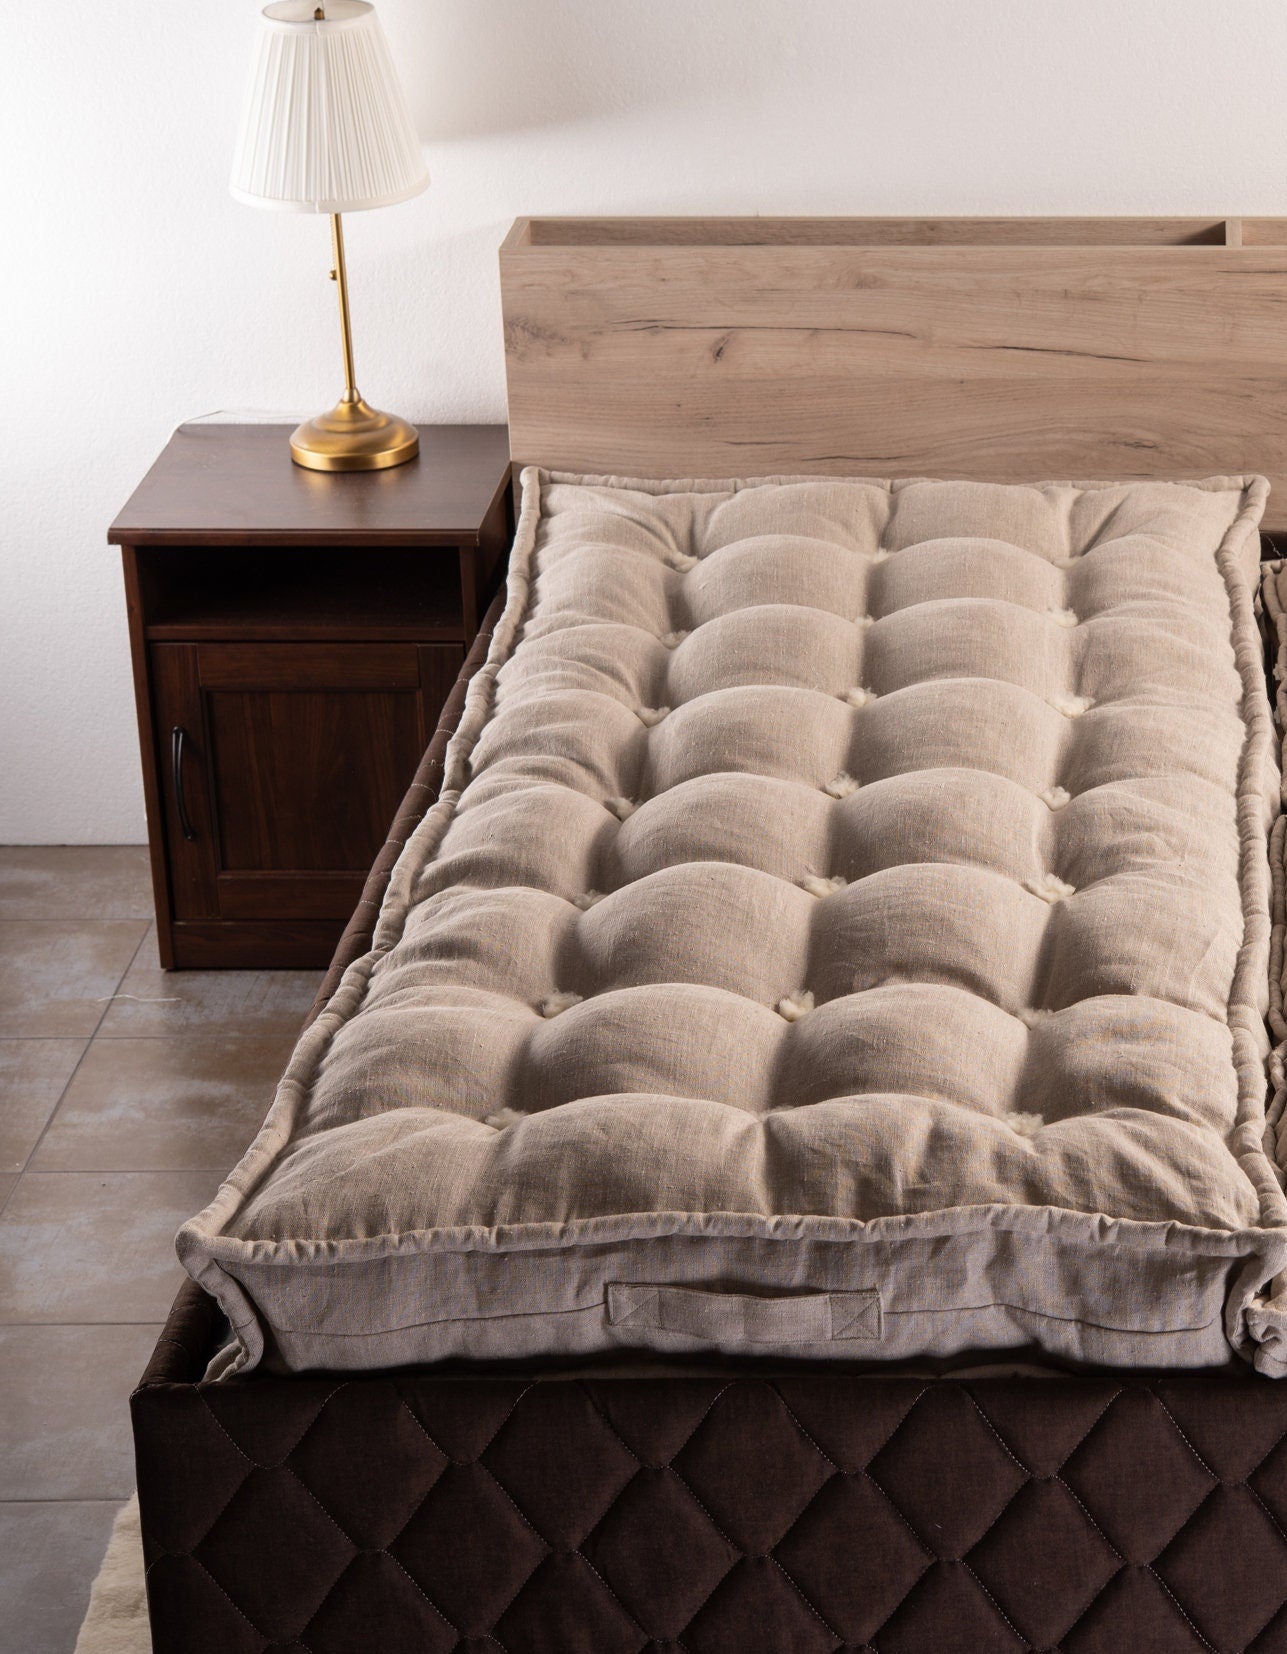 Merino Wool and Linen mattress